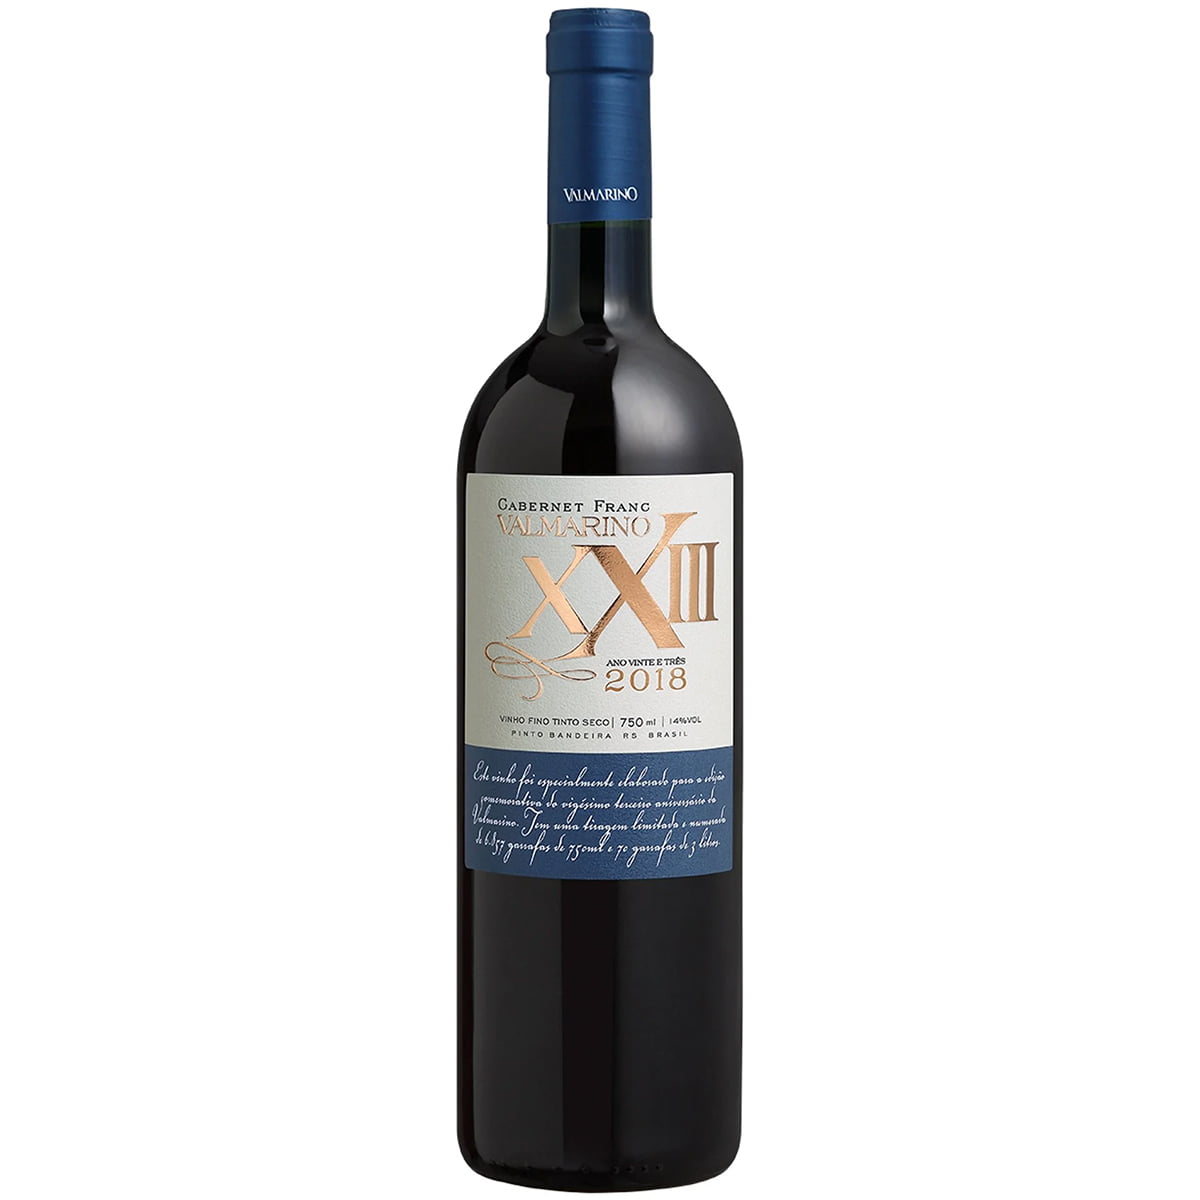 Vinho Valmarino XXIII Cabernet Franc Safra 2018 Tinto 750ml